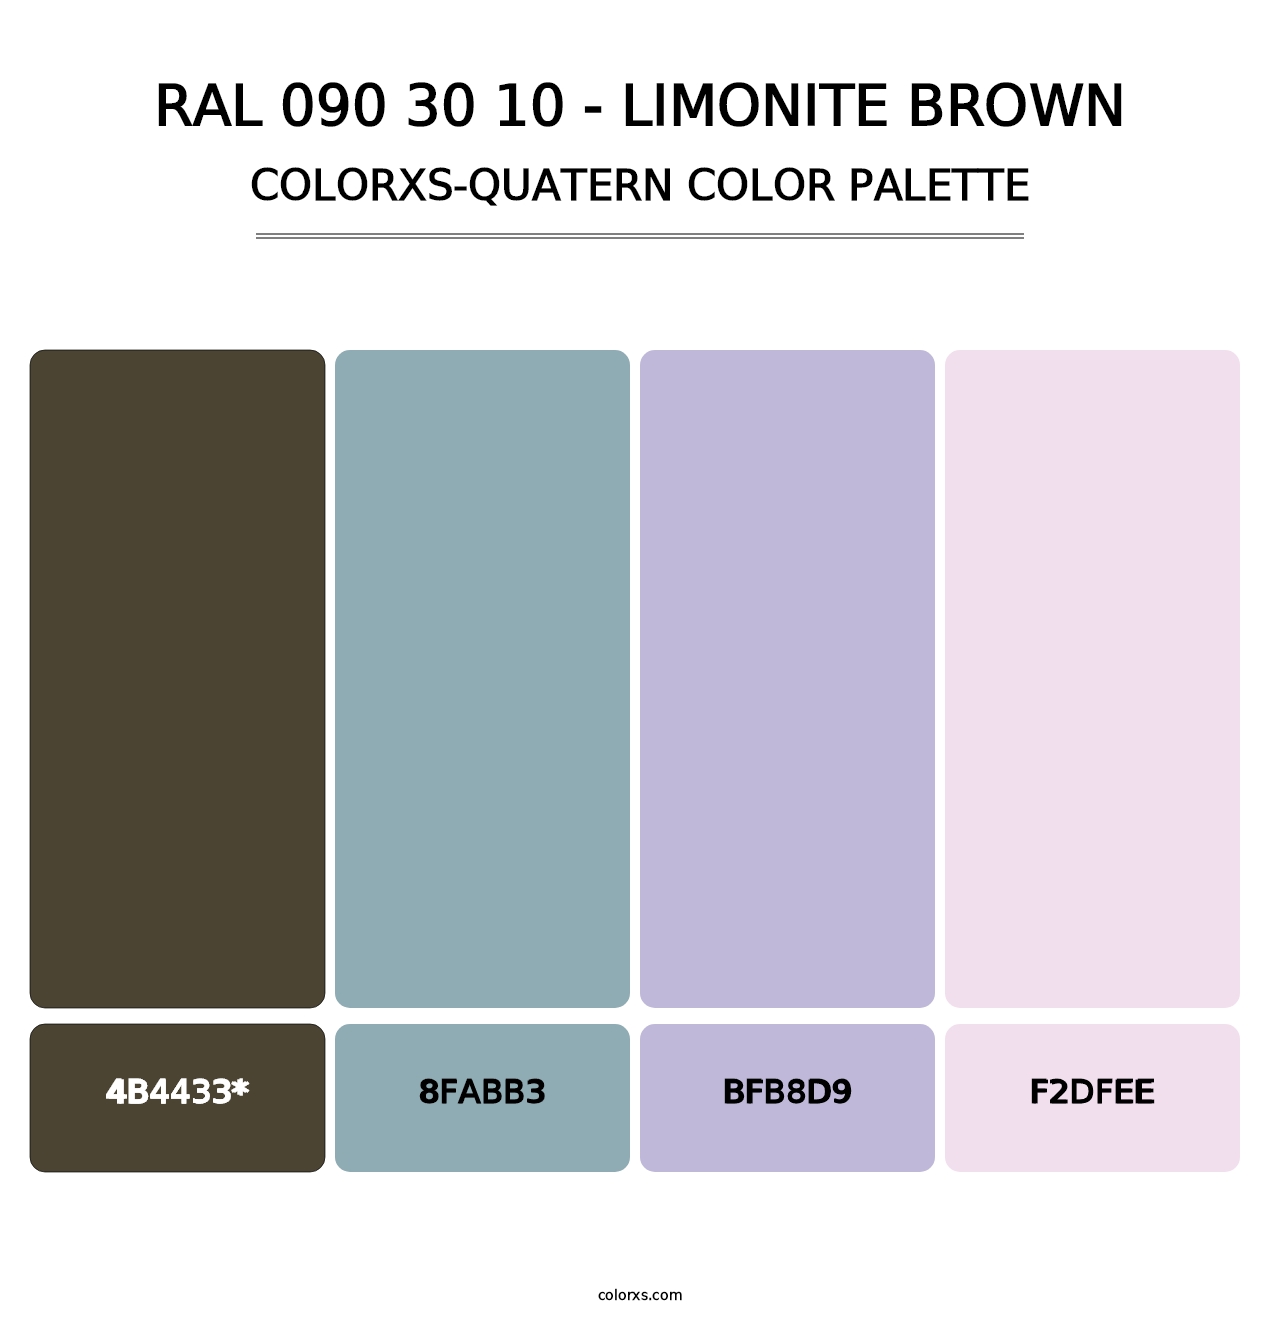 RAL 090 30 10 - Limonite Brown - Colorxs Quatern Palette